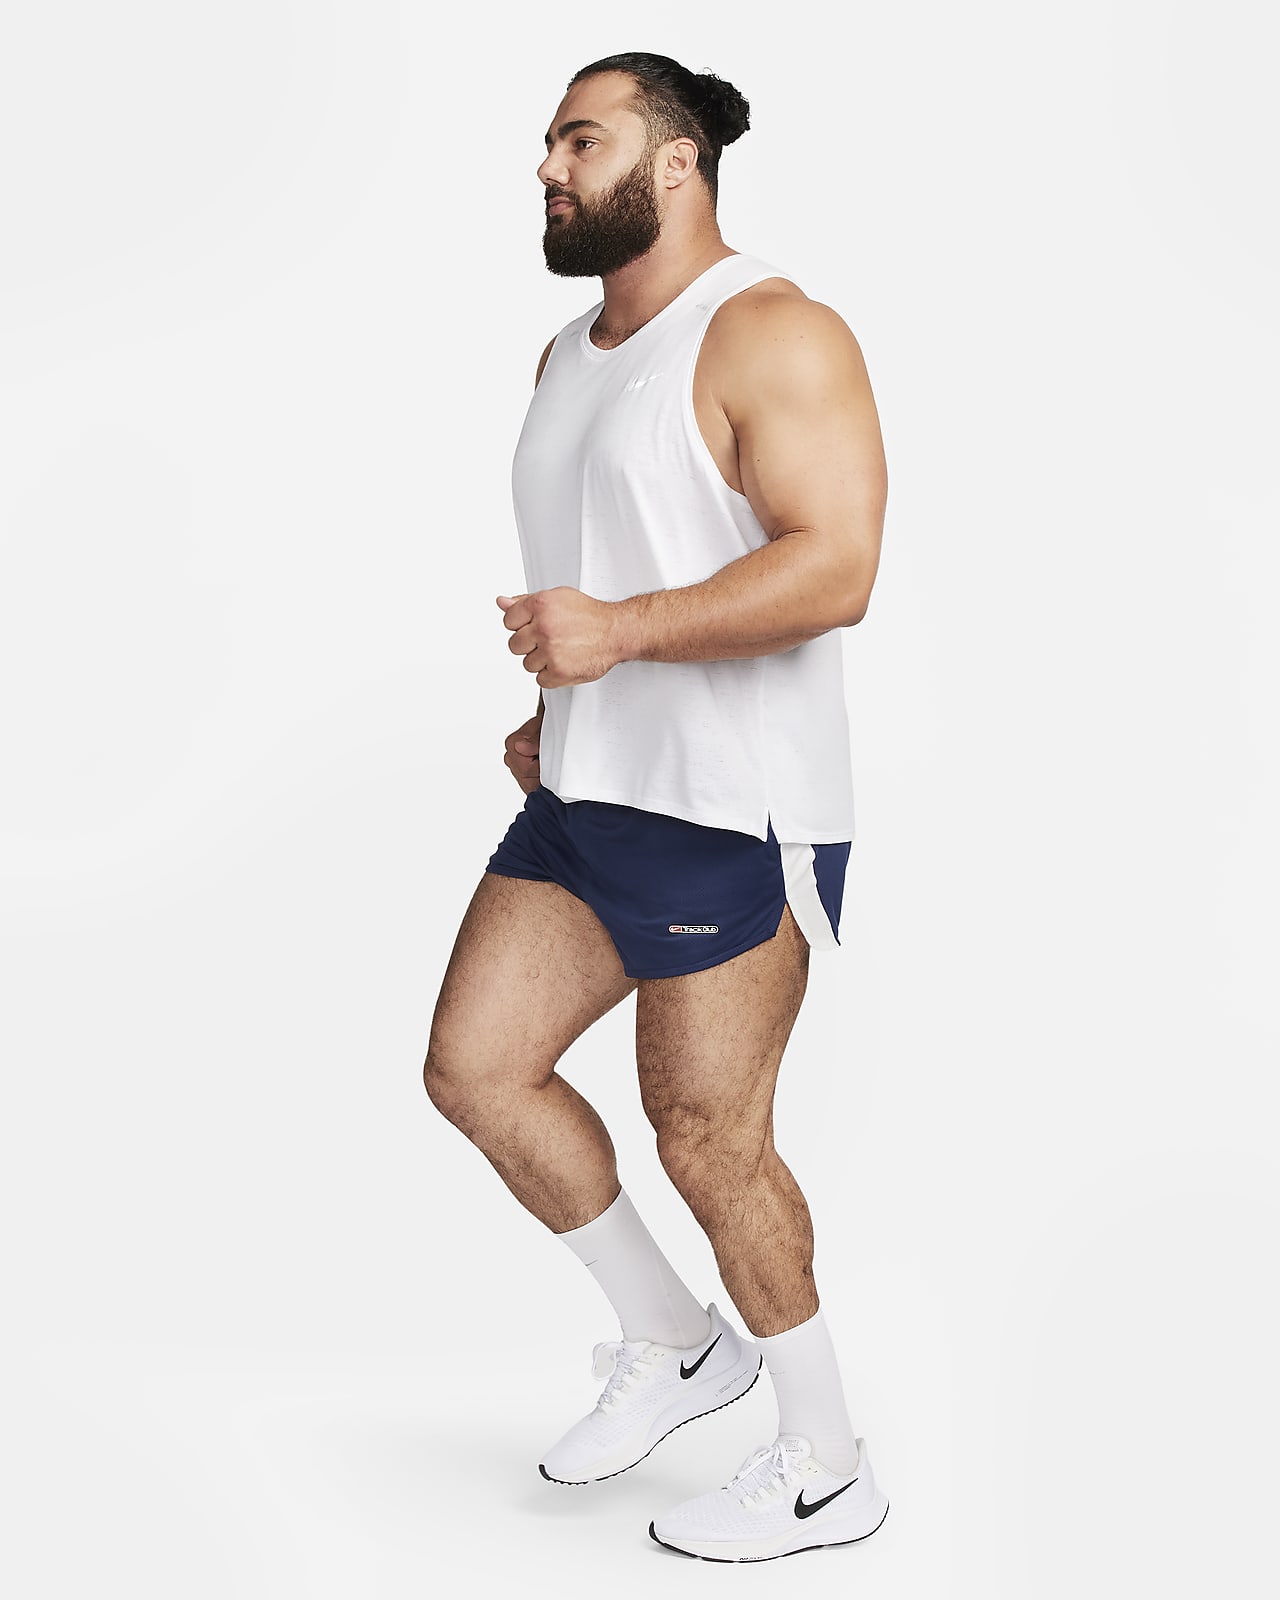 Nike Track Club Men's Dri-FIT Short-Sleeve Running Top.